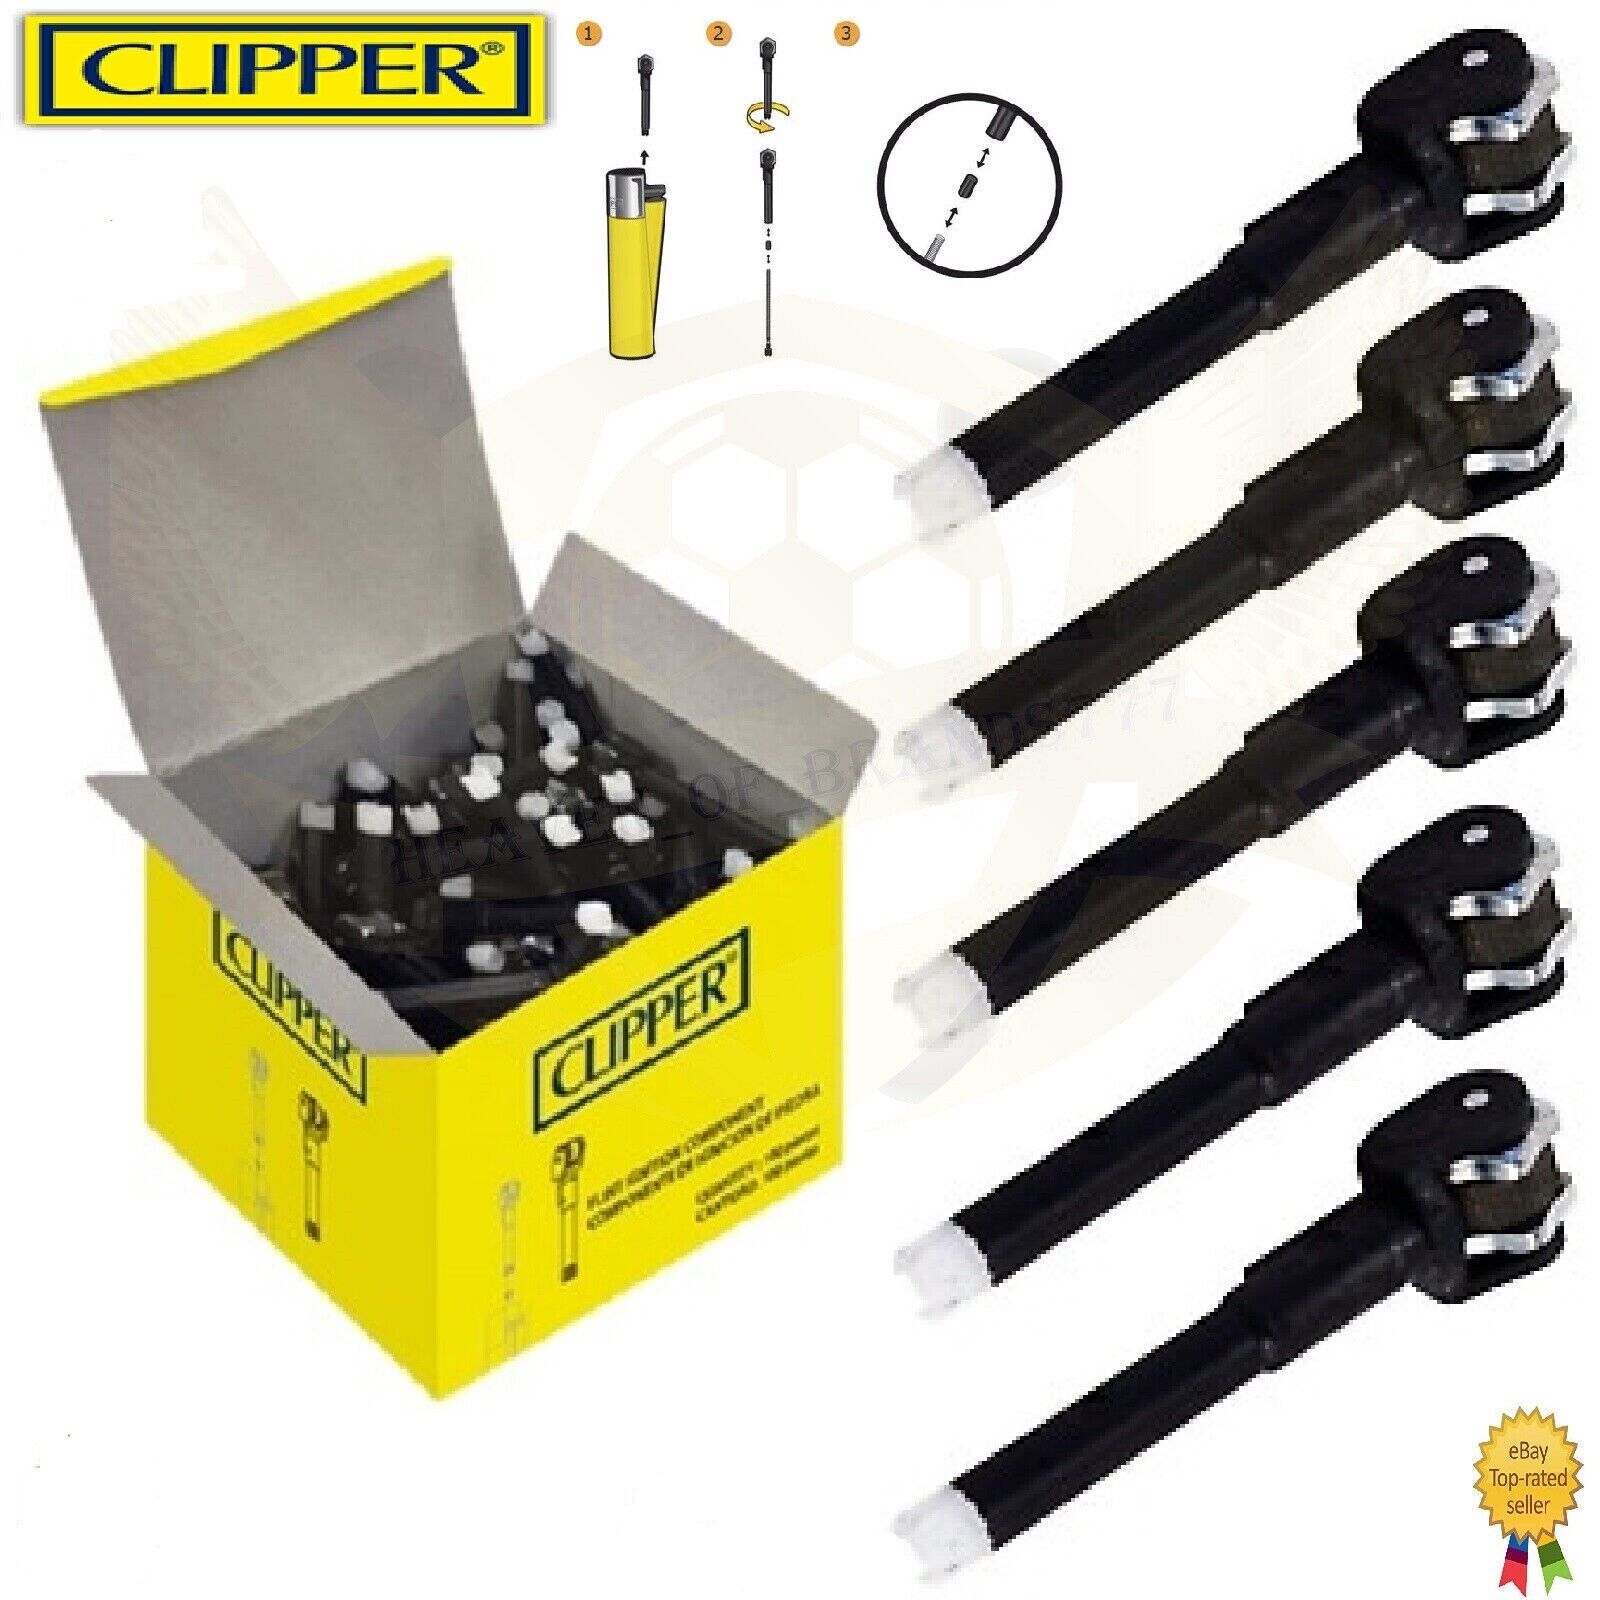 Clipper Lighter Spare Replacement Flint & Wheel Barrel Stem for Clipper Lighter